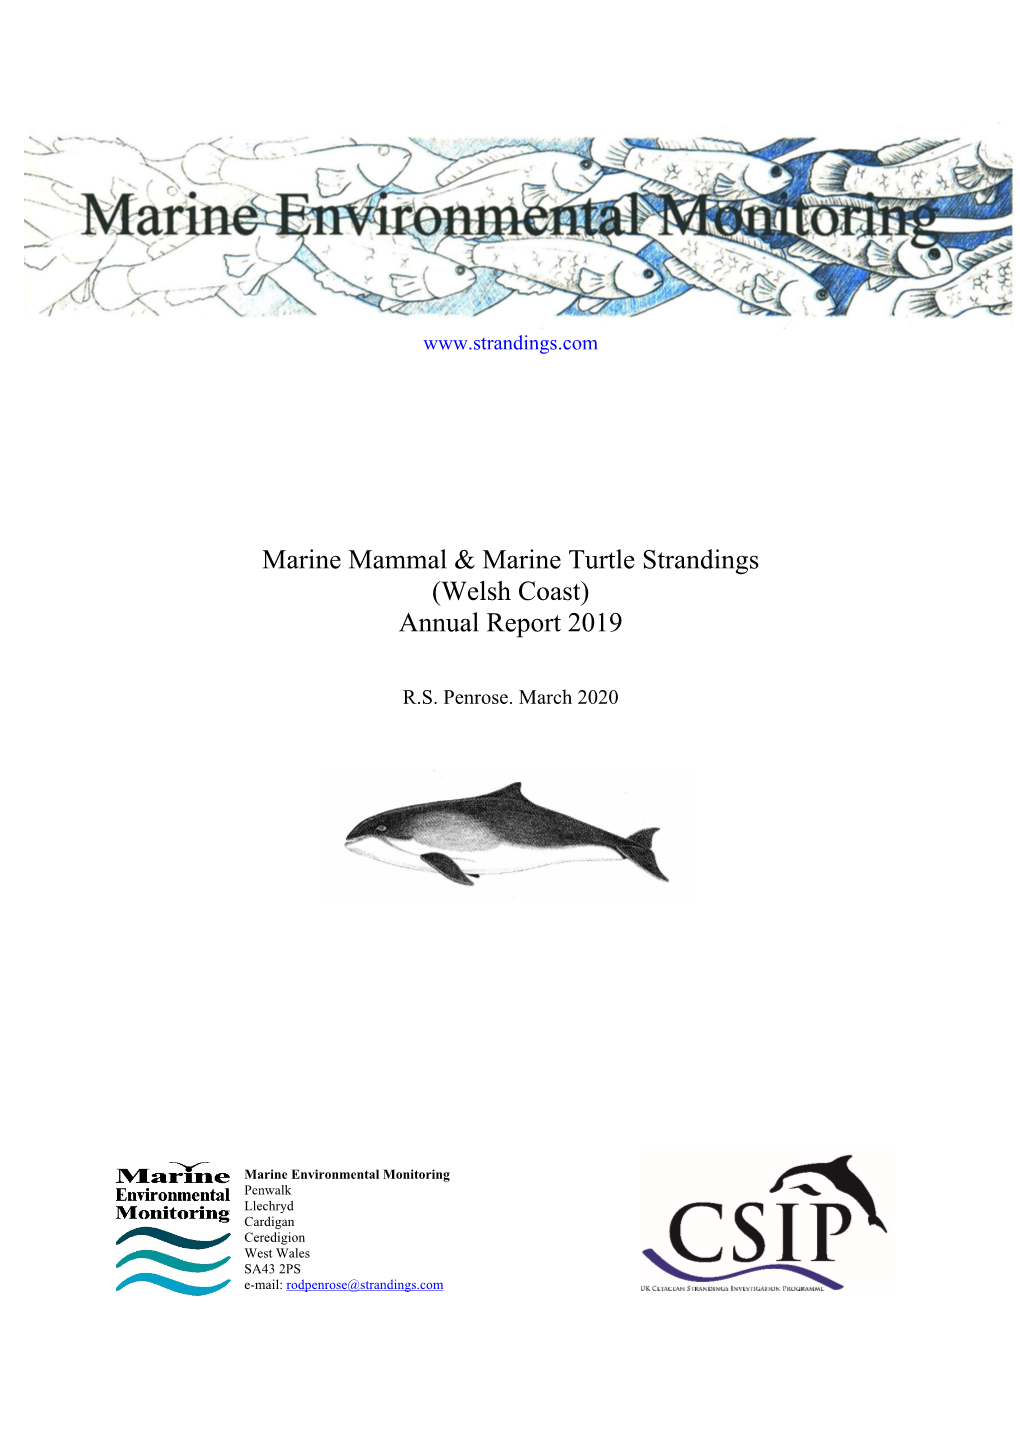 2019 Marine Mammal Strandings Annual Report